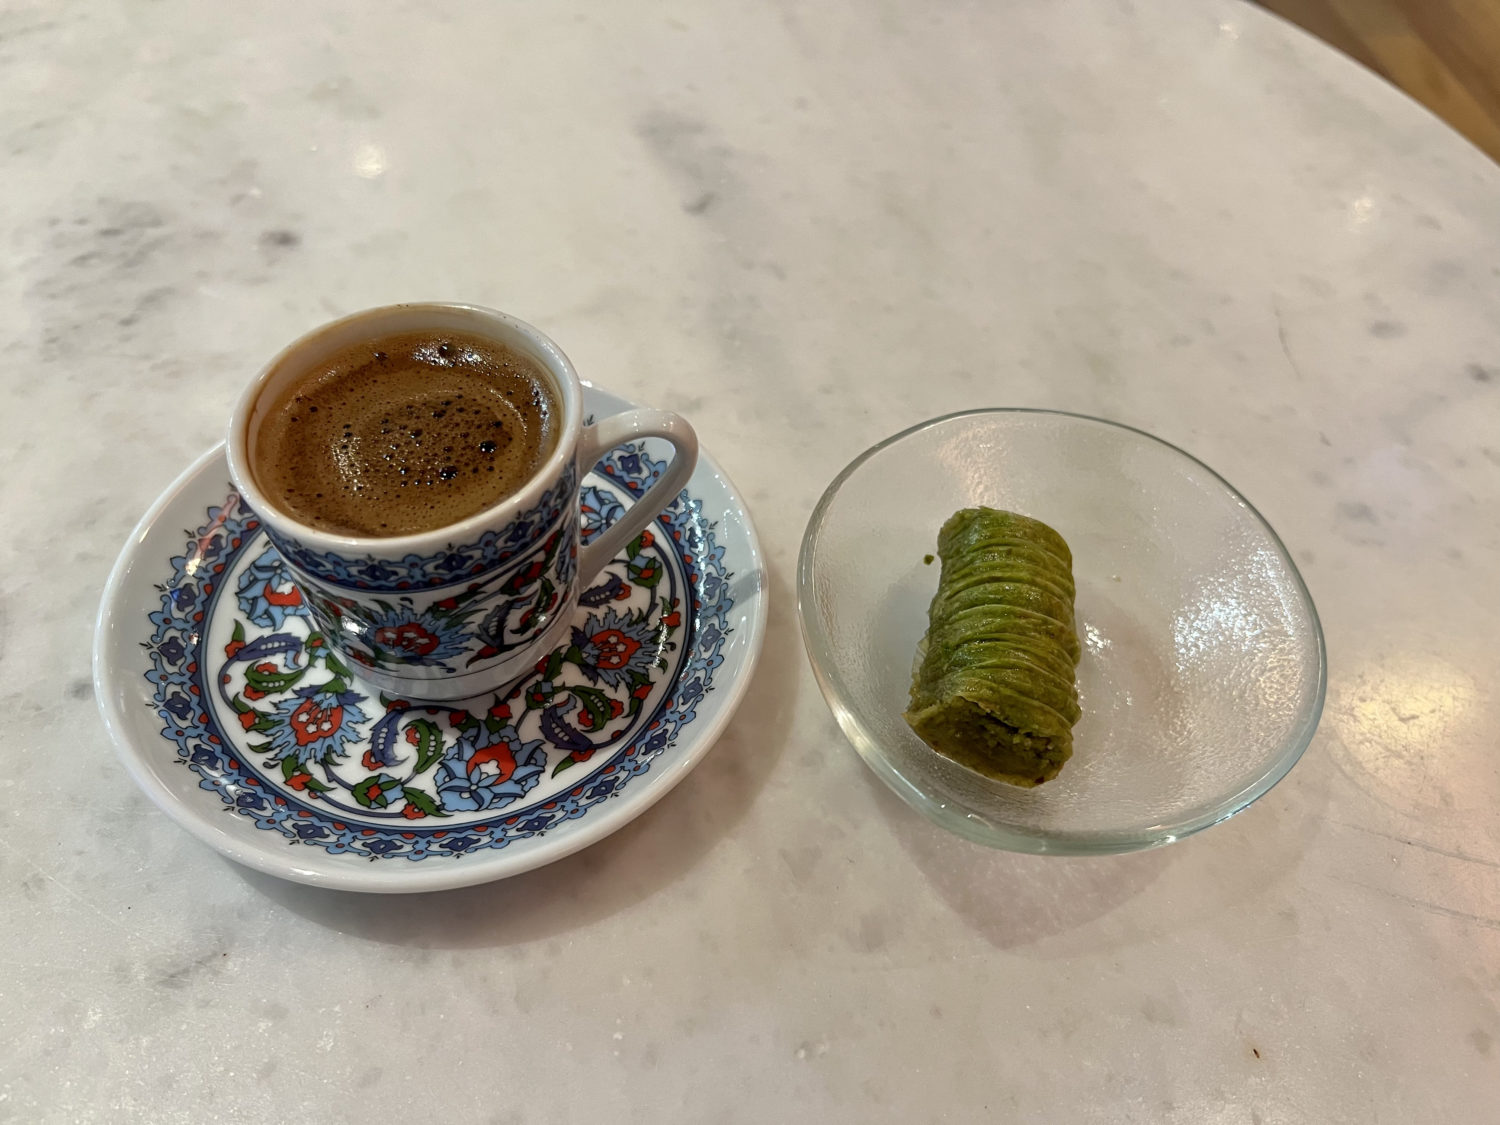 turkish coffee and a treat